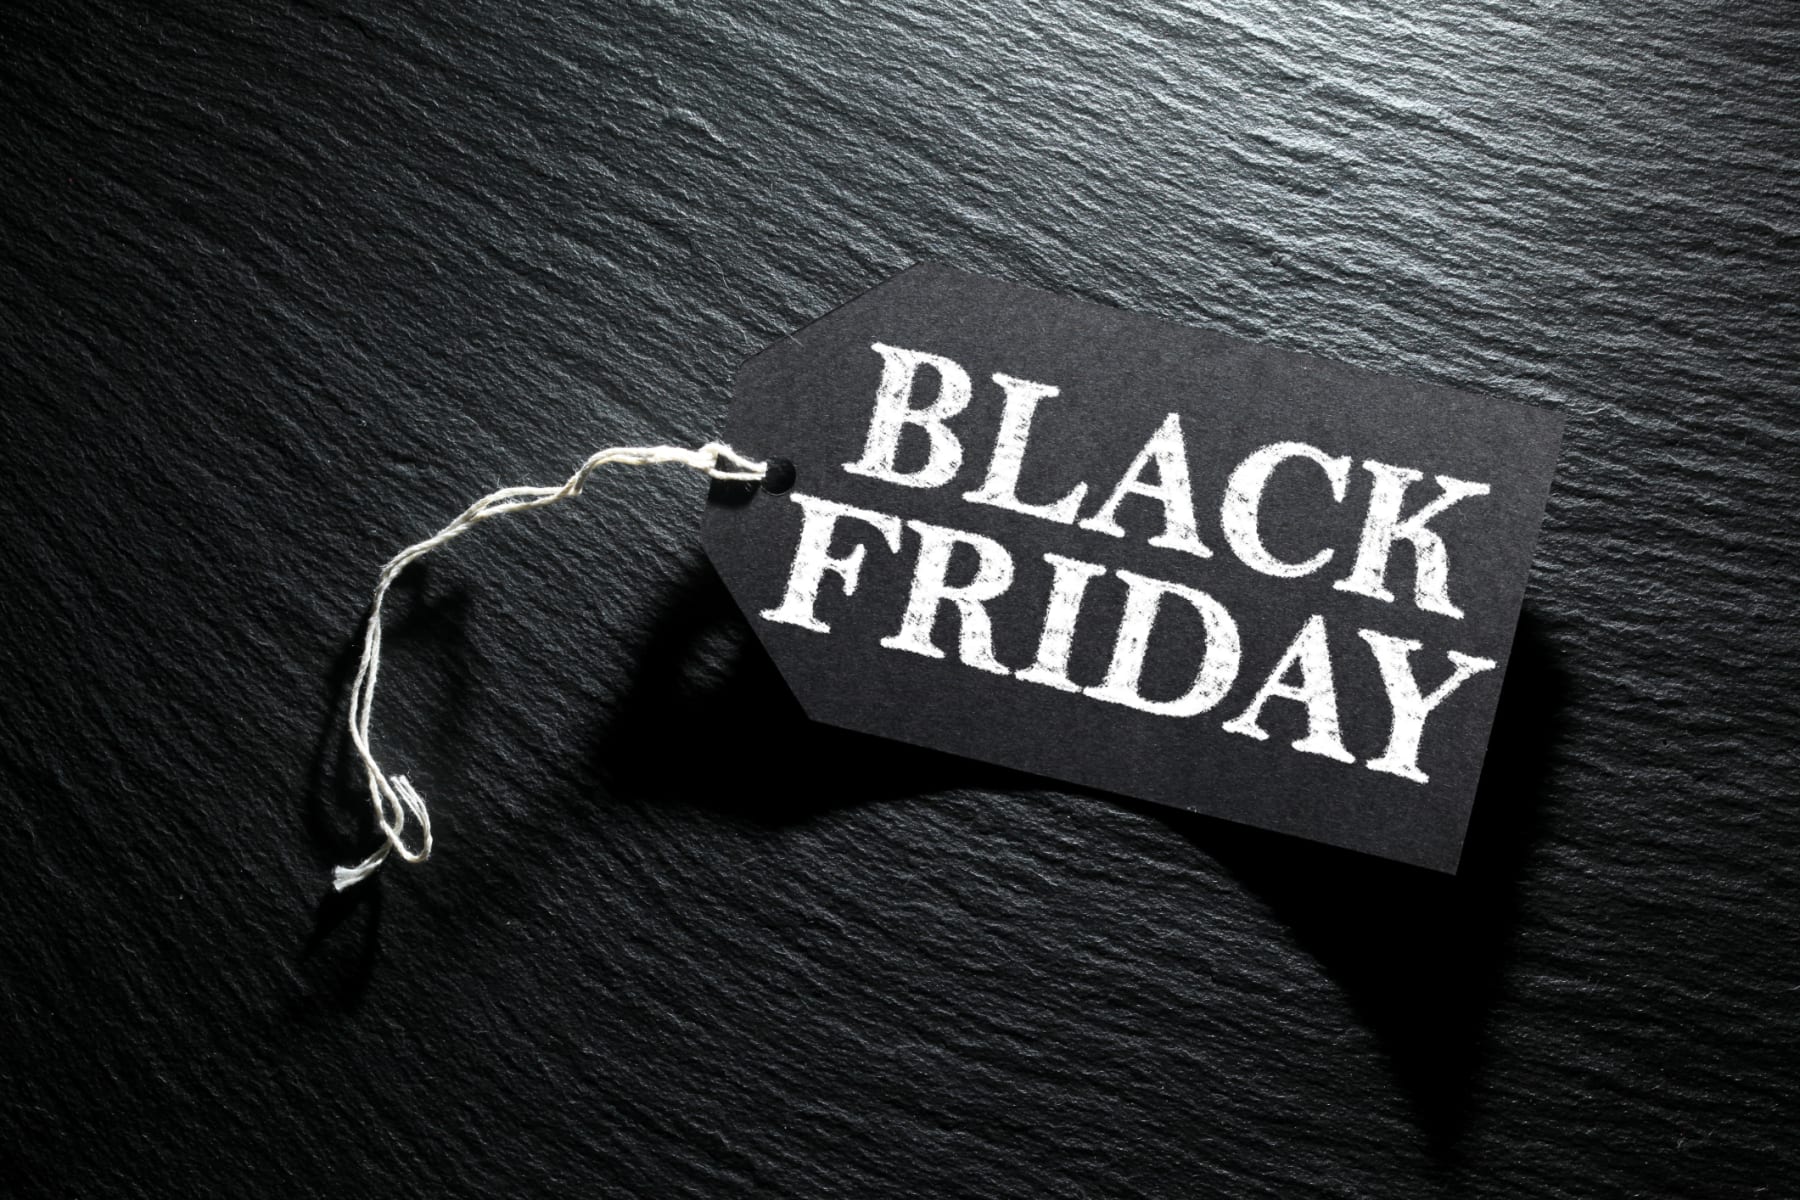 Black Friday tag shown against black background.